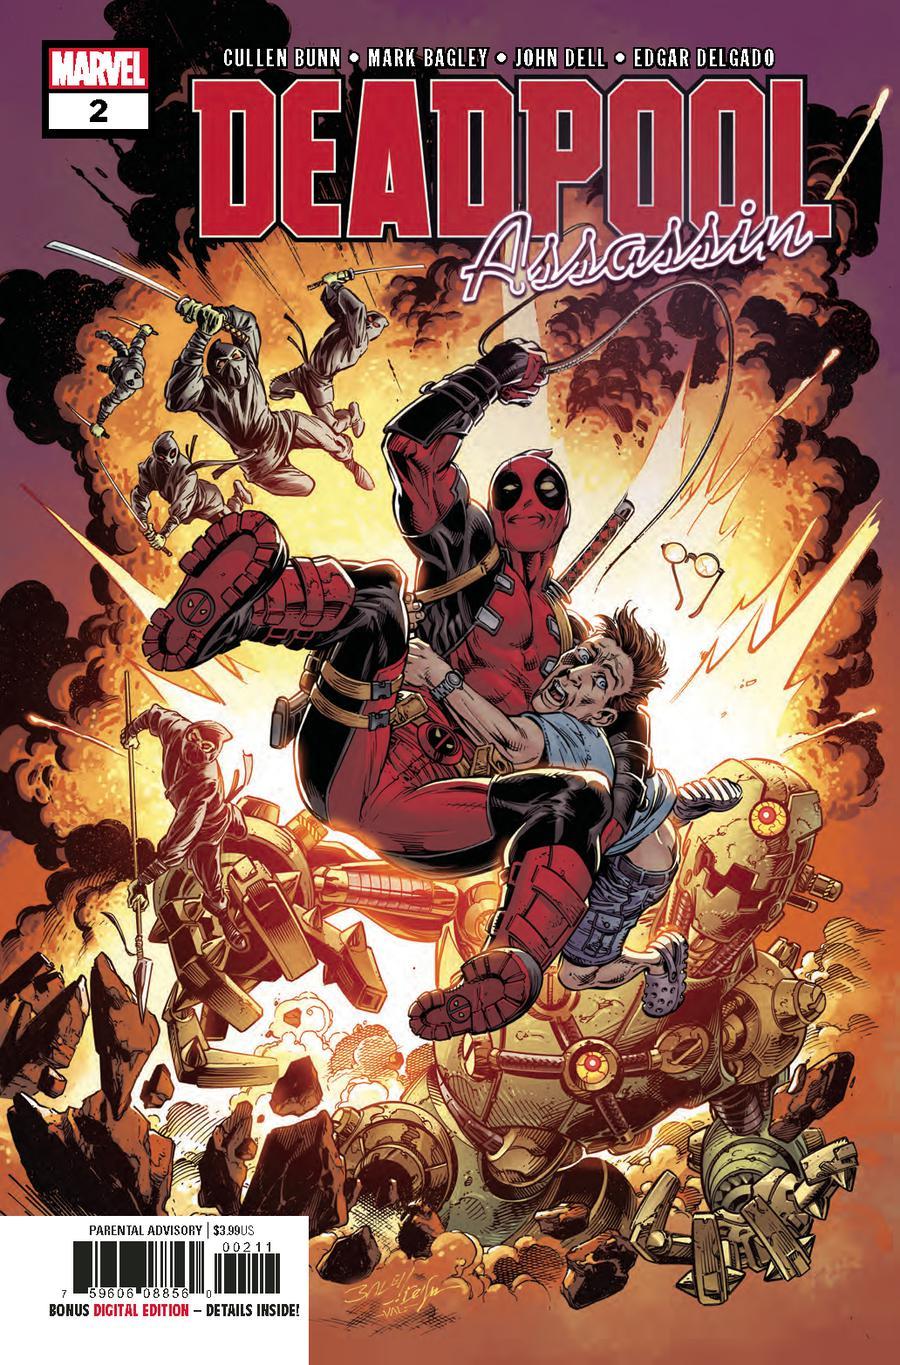 Deadpool Assassin Vol. 1 #2